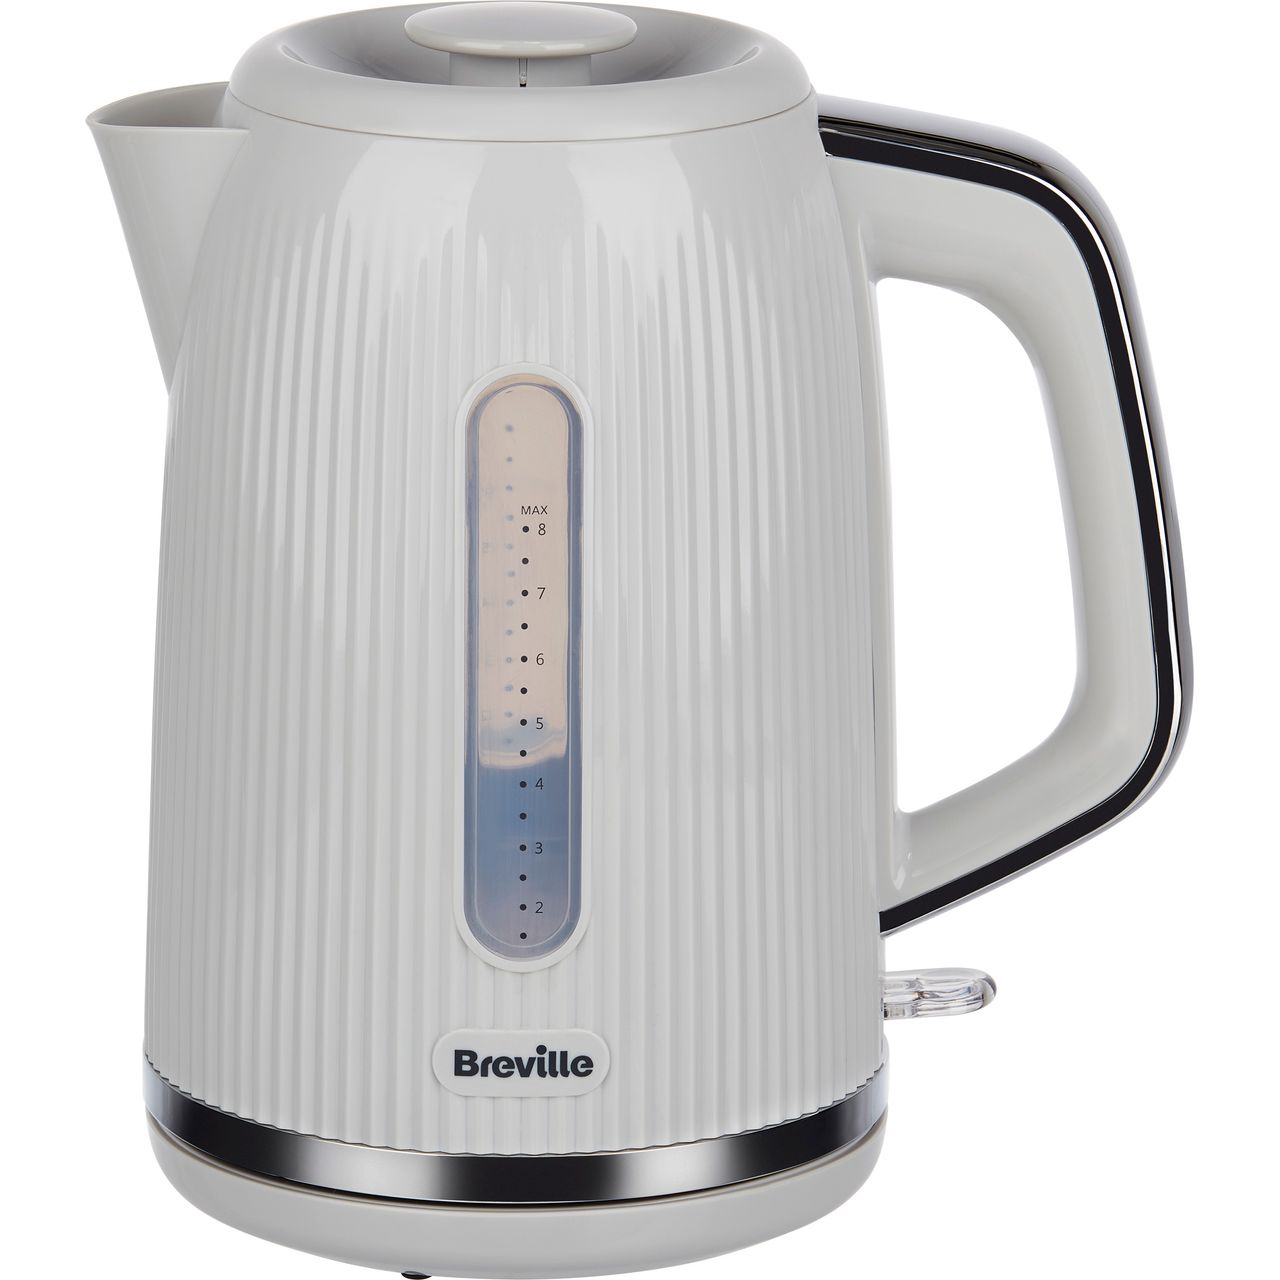 breville vkt092 flow electric kettle, 1.7 l, 3 kw fast boil, grey 220-240  volts (not for usa)